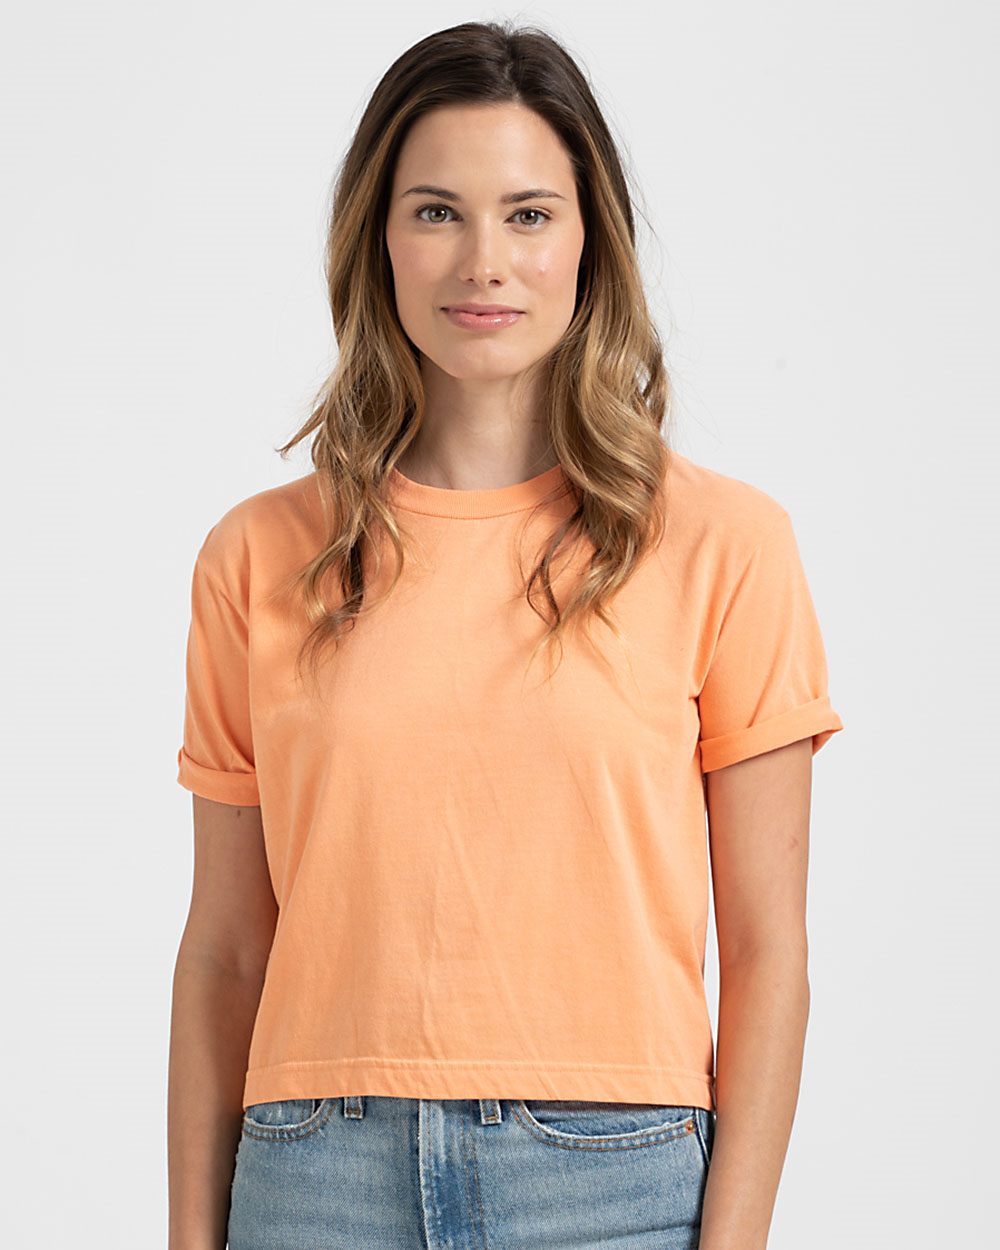 Bella Ladies' Crop Top - 6681 $6.18 - T-Shirts